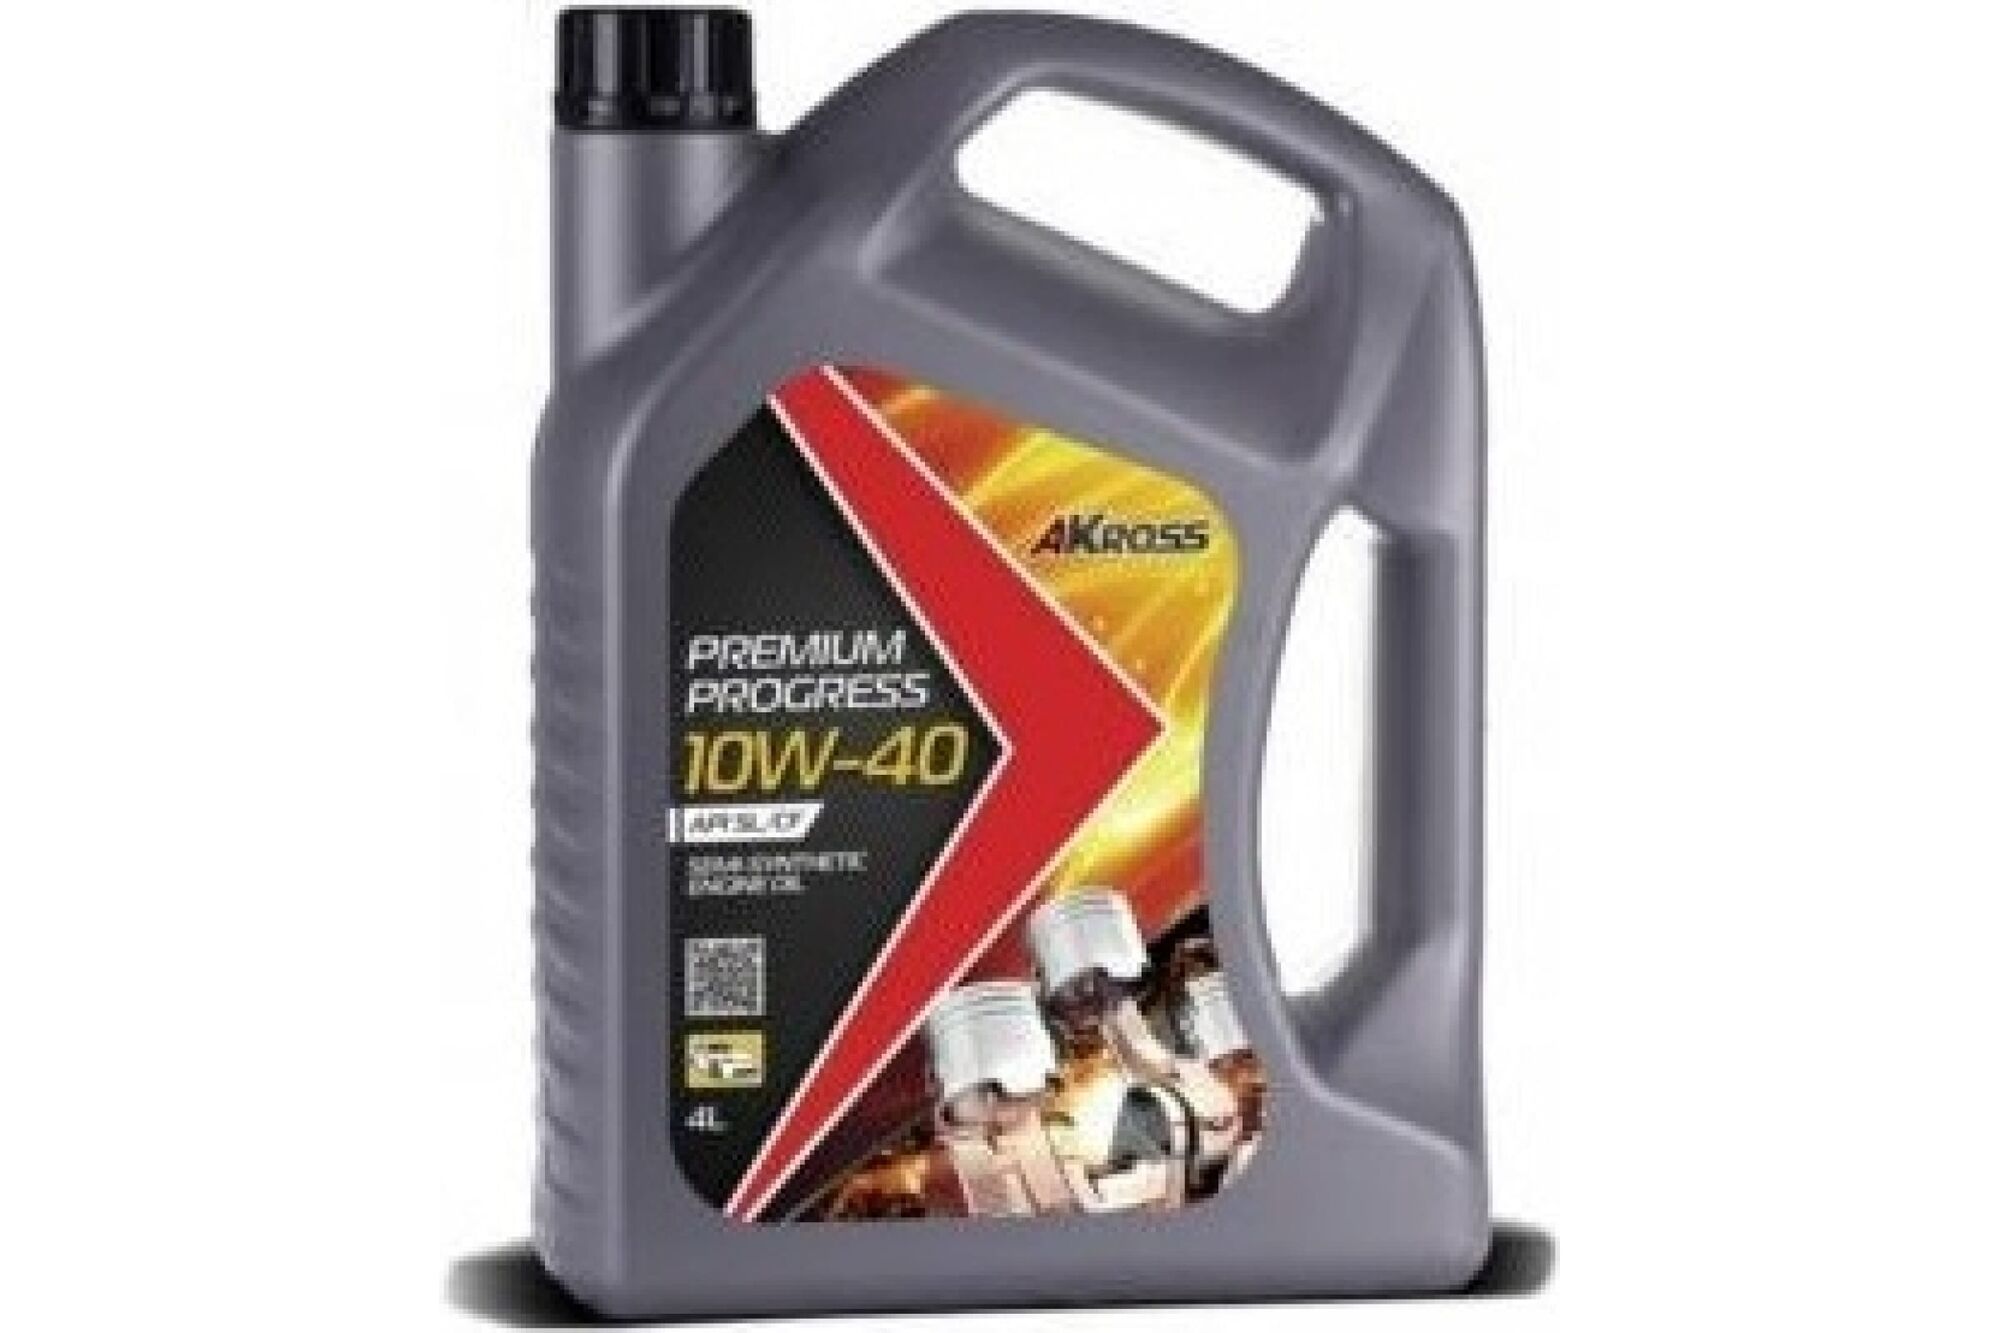 Моторное масло AKross PREMIUM PROGRESS полусинтетическое, 10W-40, SL/CF, 4 л AKS0002MOS Premium